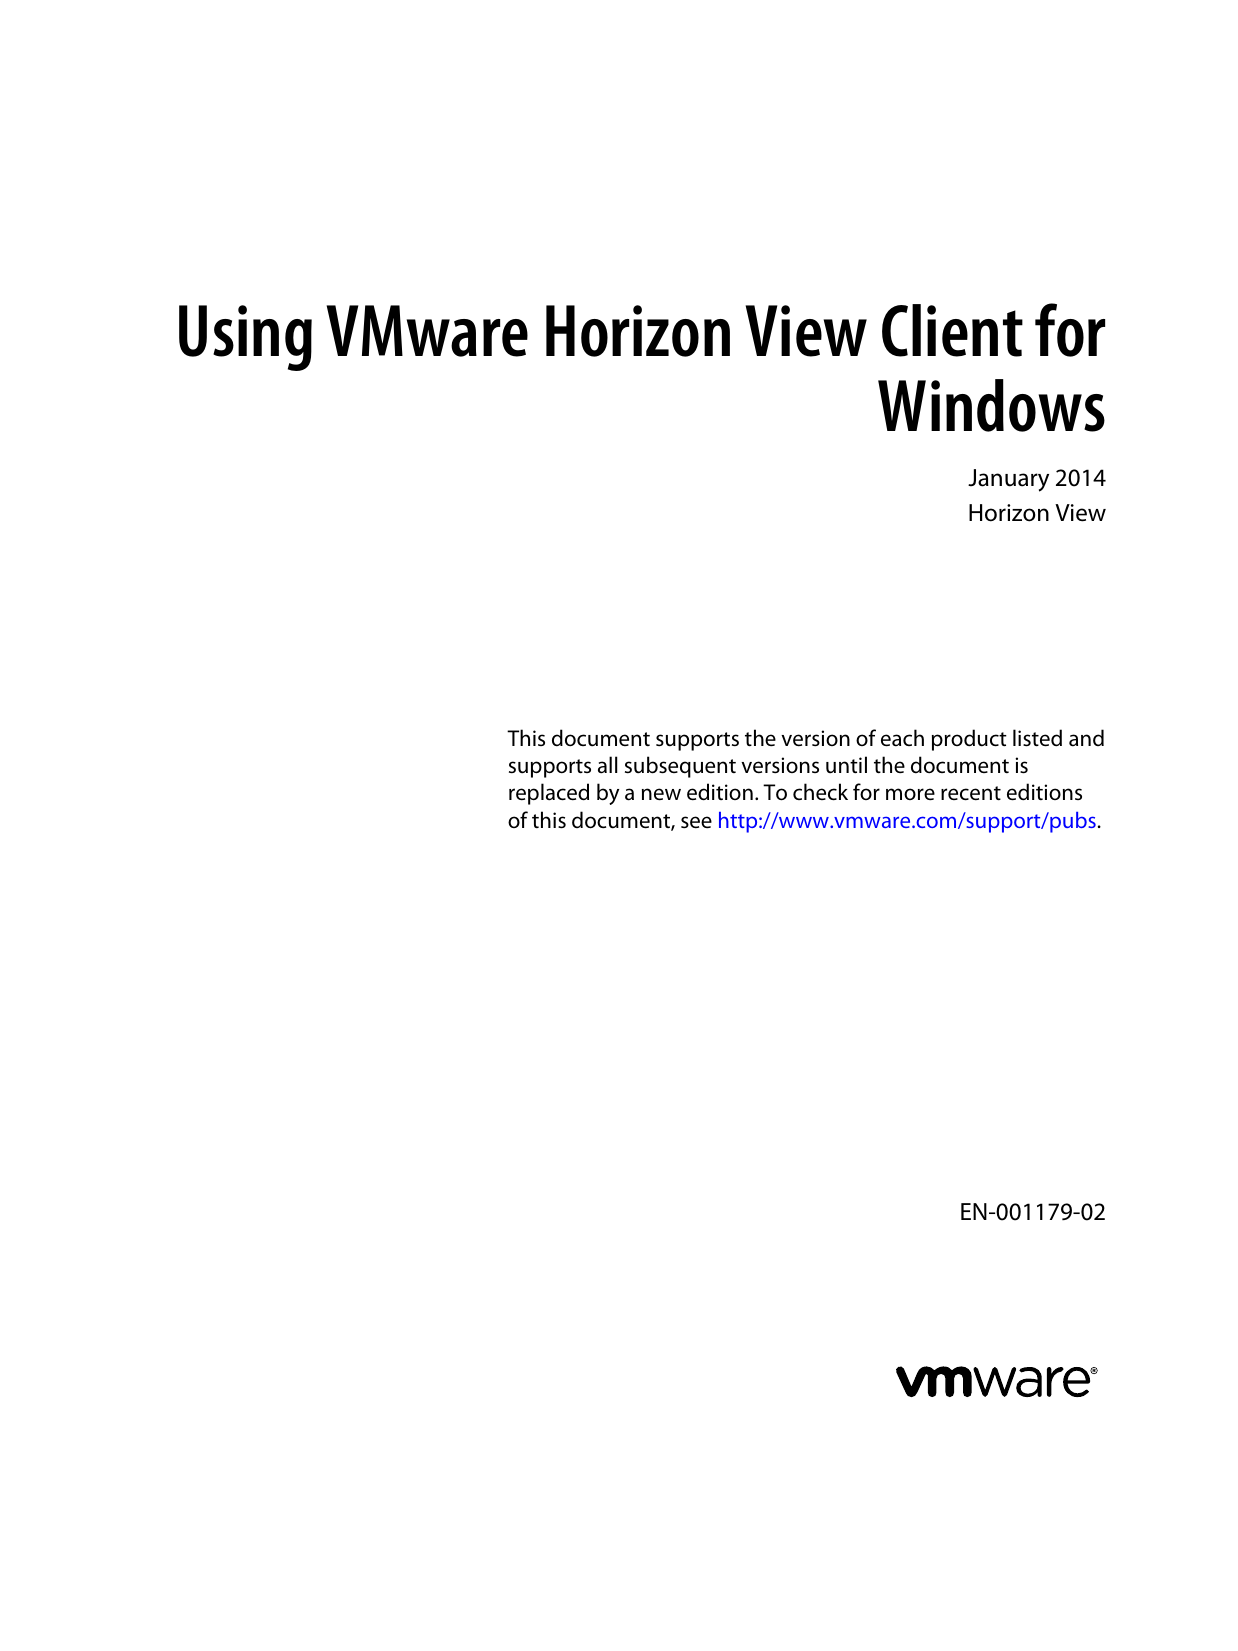 vmware horizon view client for windows 10